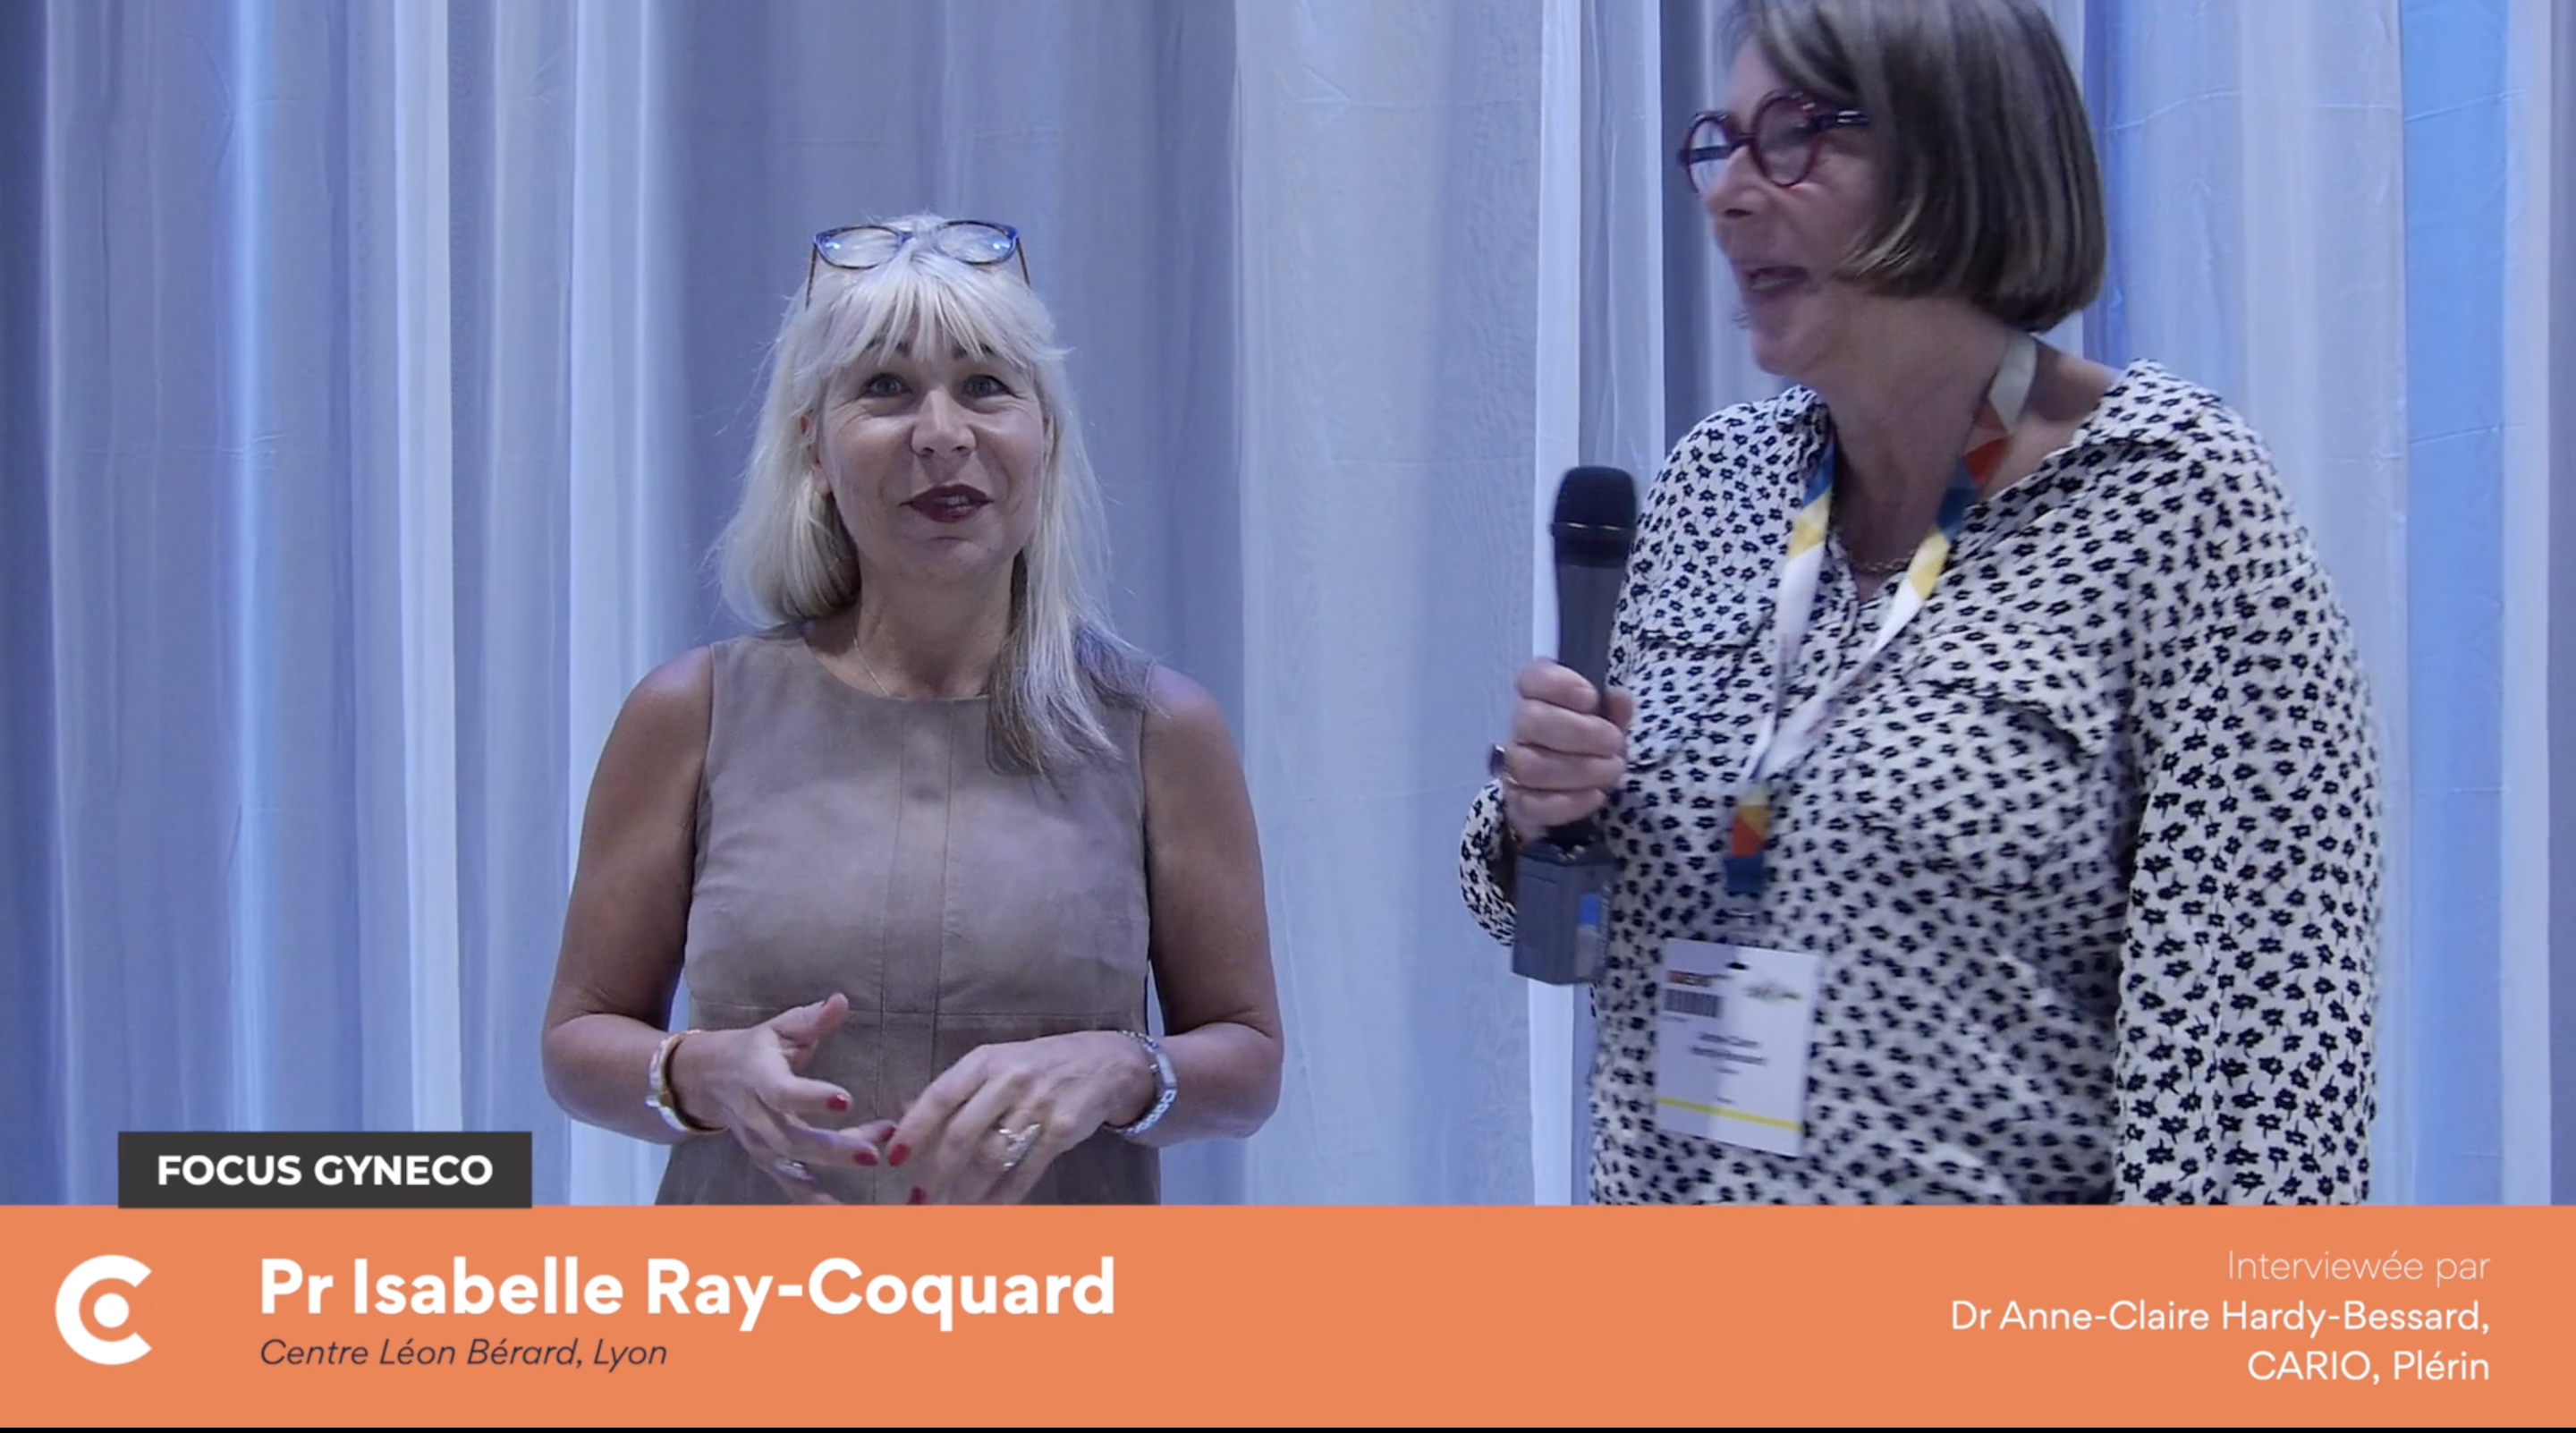 Pr Ray-Coquard